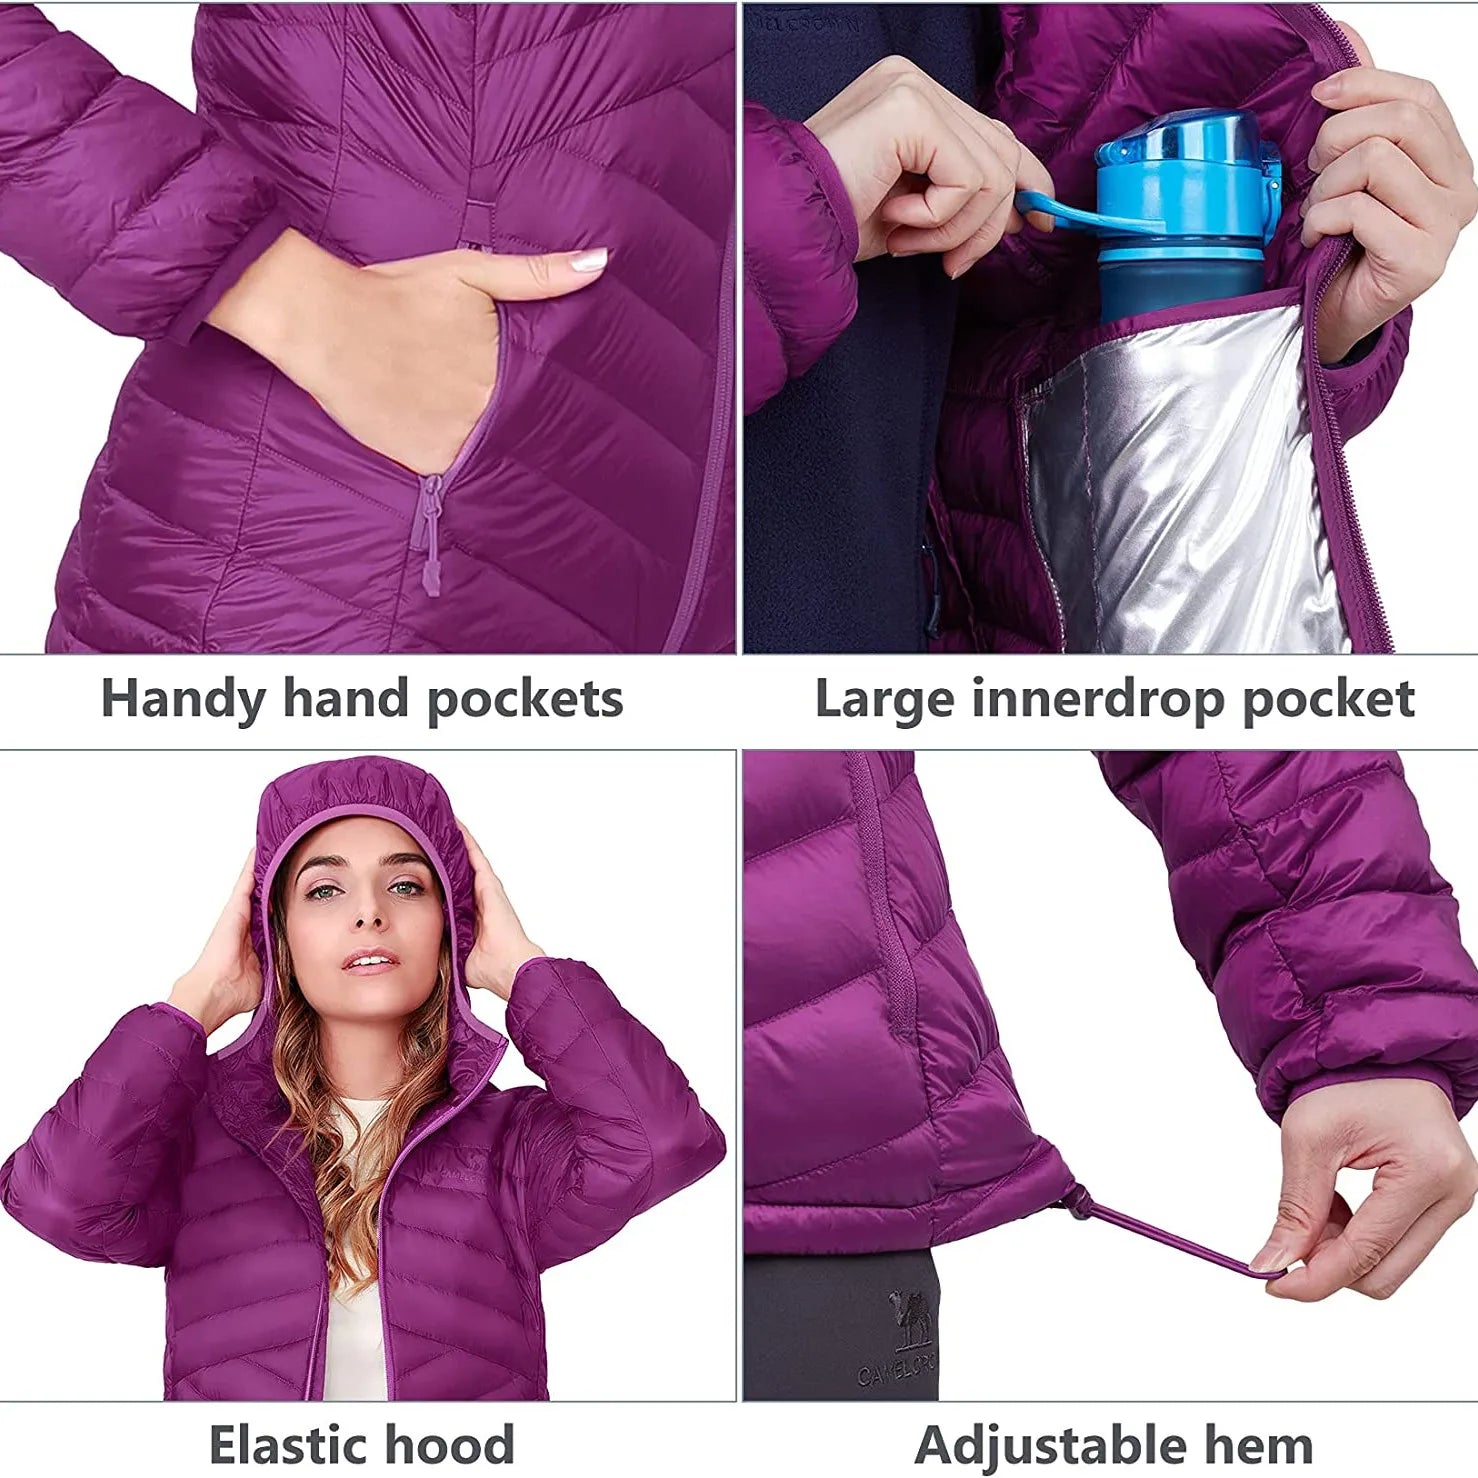 Women’s Hooded Down Jackets Lightweight Packable Anti-static Warm Jacket Puffer Insulated Women's